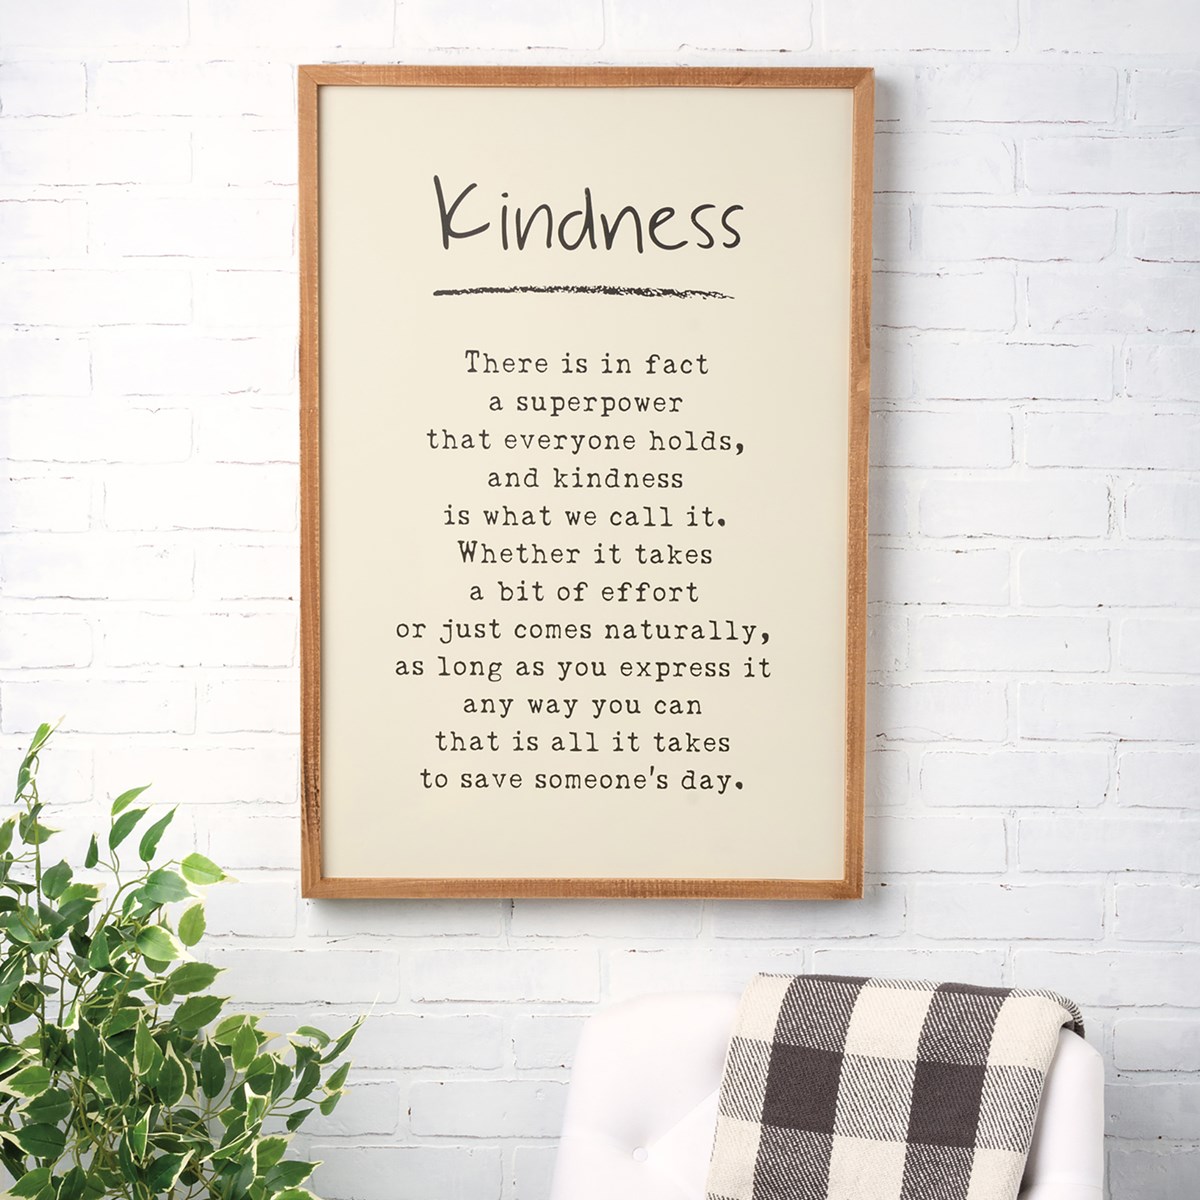 Kindness Inset Box Sign - Wood